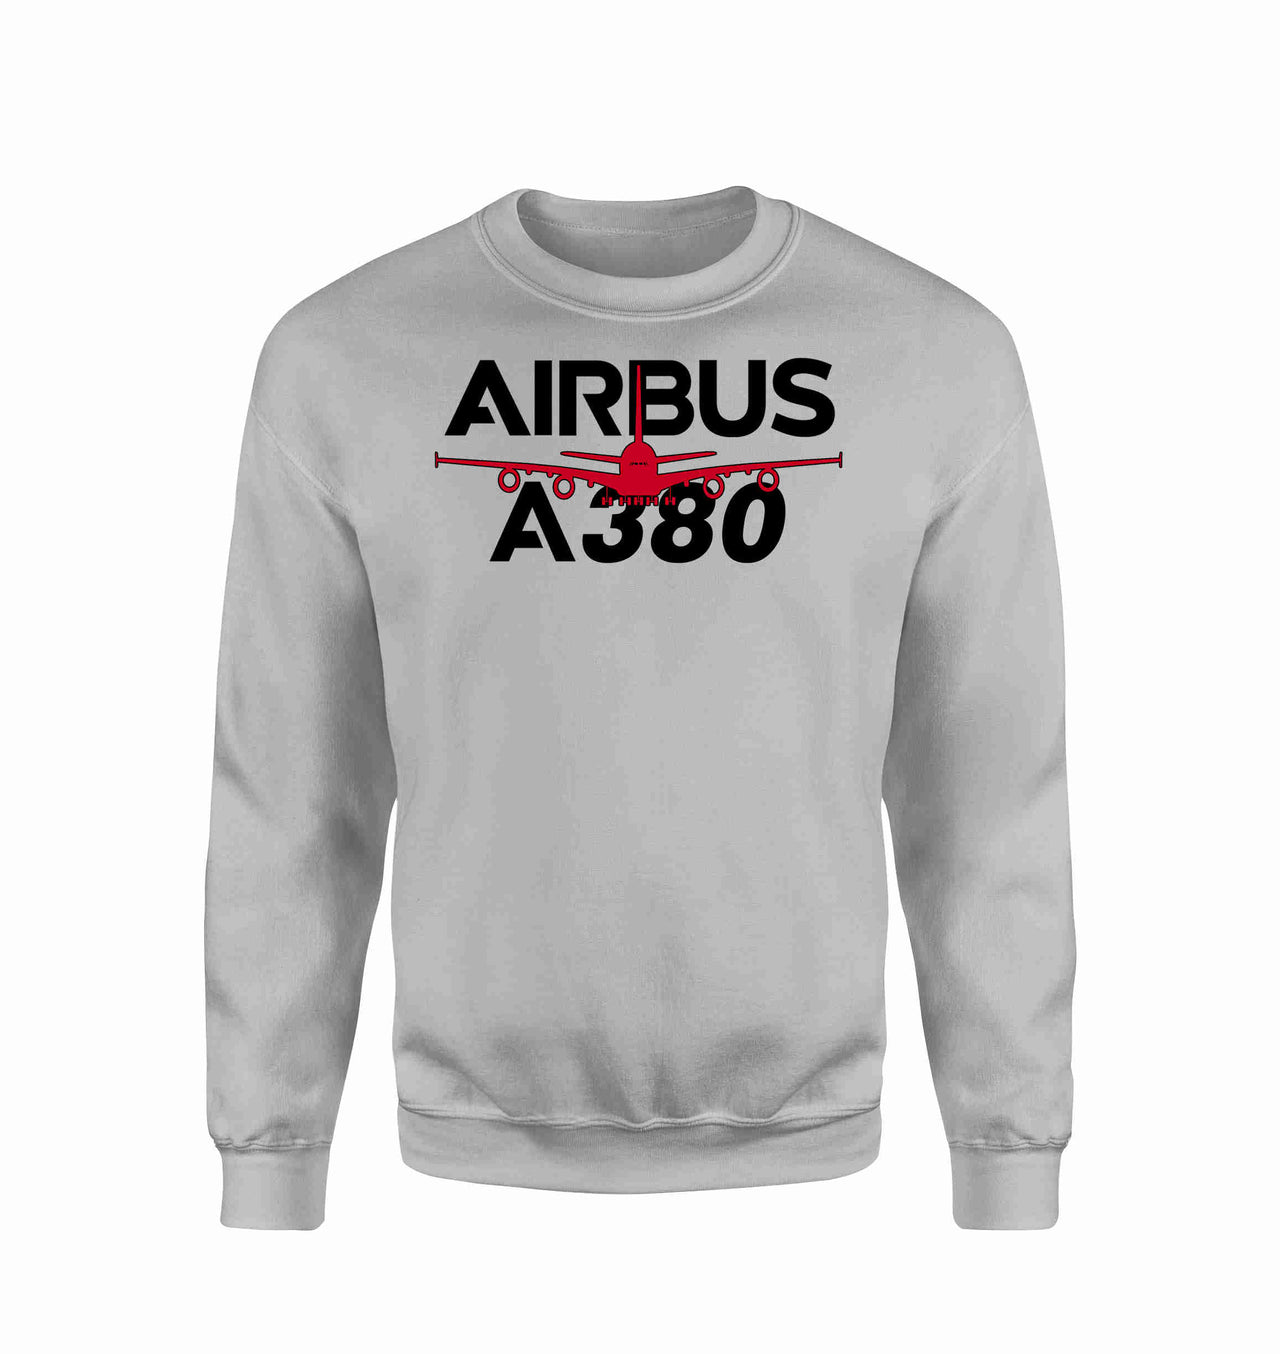 Amazing Airbus A380 Designed Sweatshirts